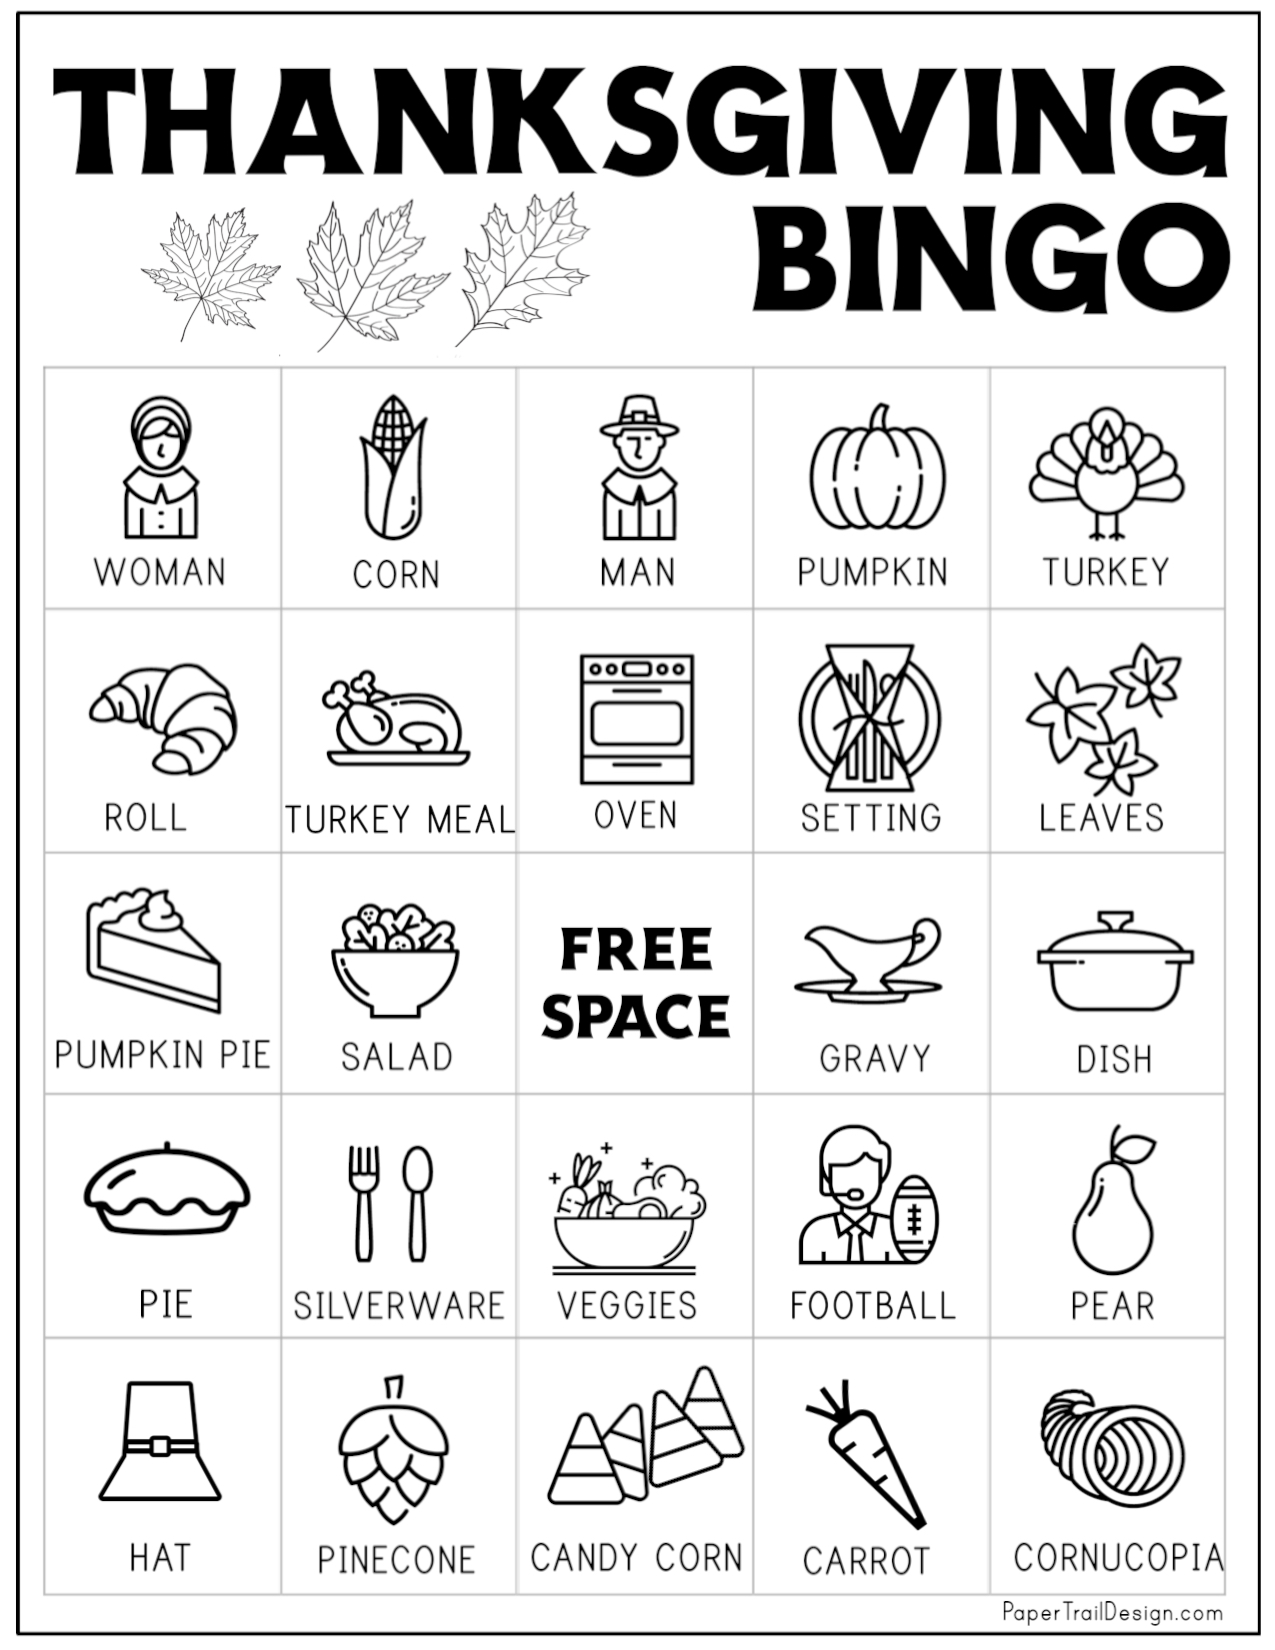 free-printable-thanksgiving-bingo-cards-printable-form-templates-and